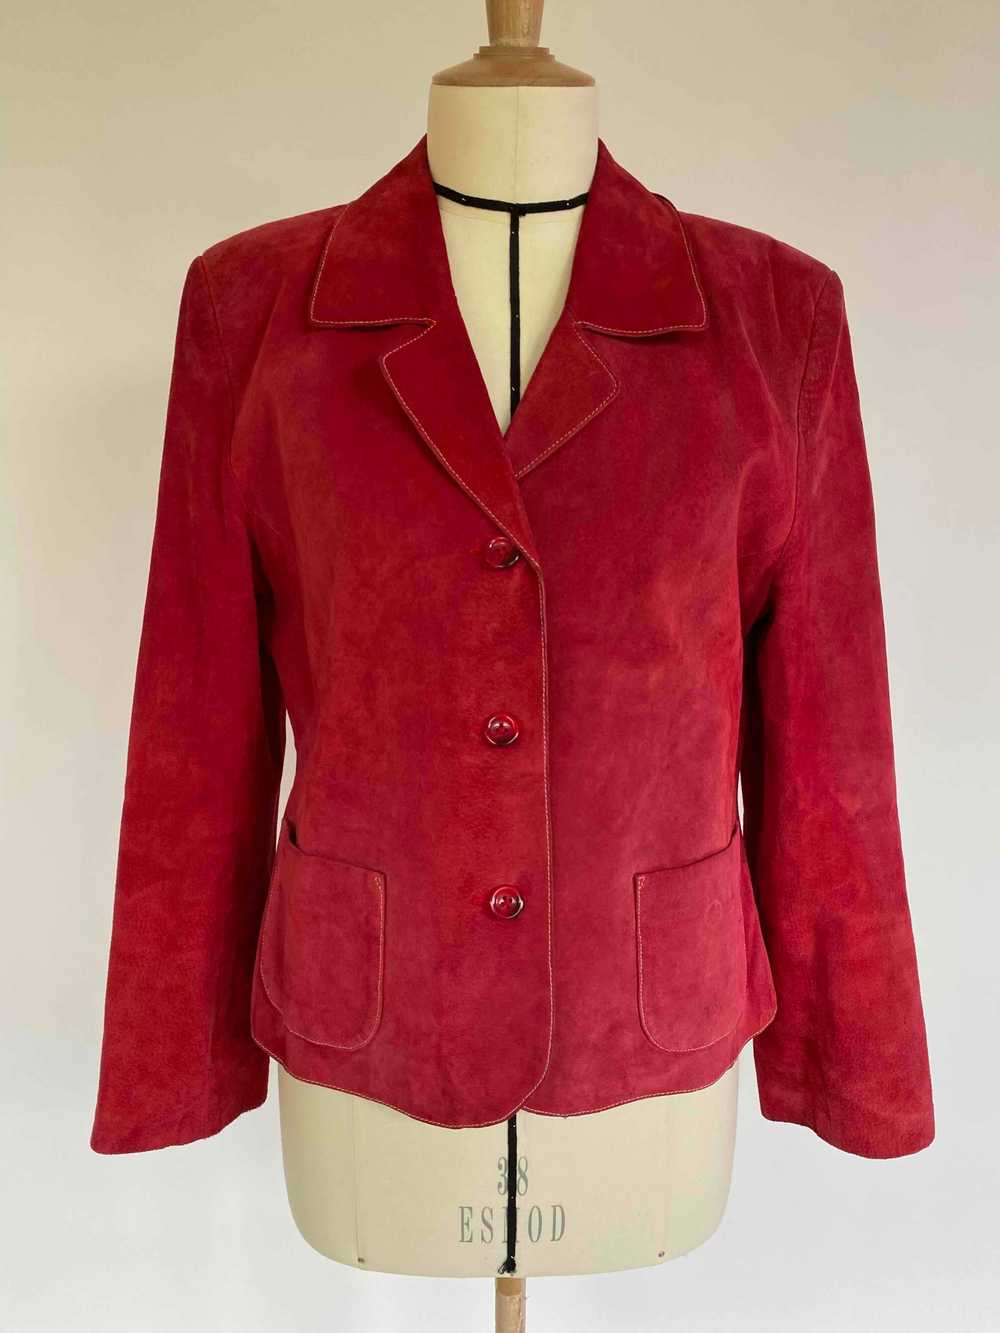 Suede jacket - Red suede jacket (100% pork rind),… - image 2